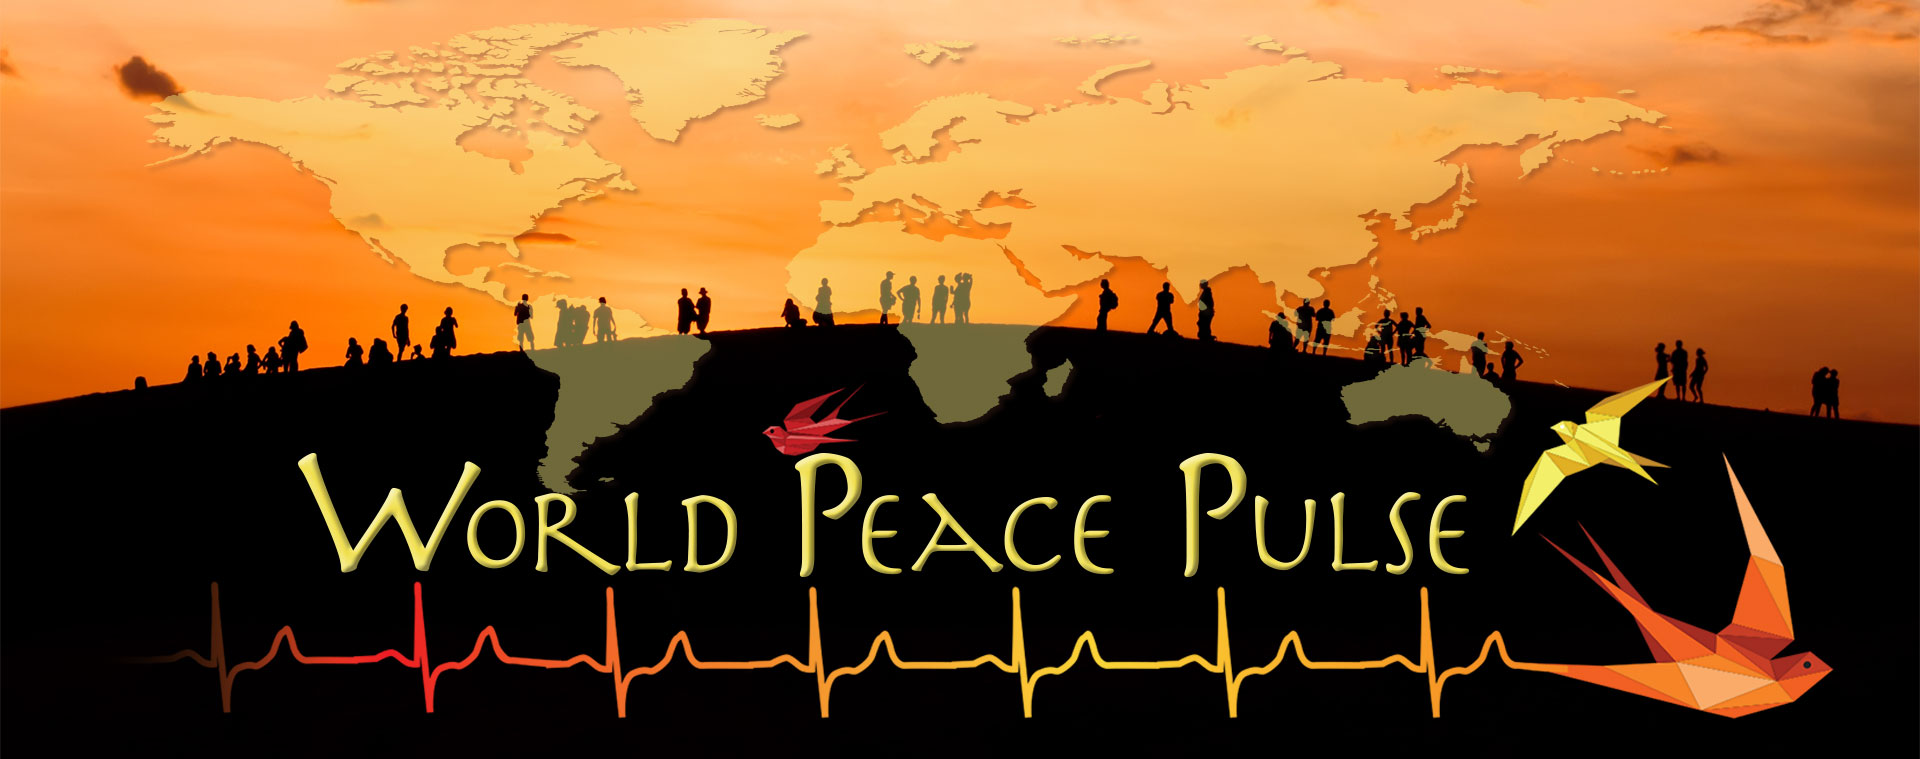 World Peace Pulse - James Twyman